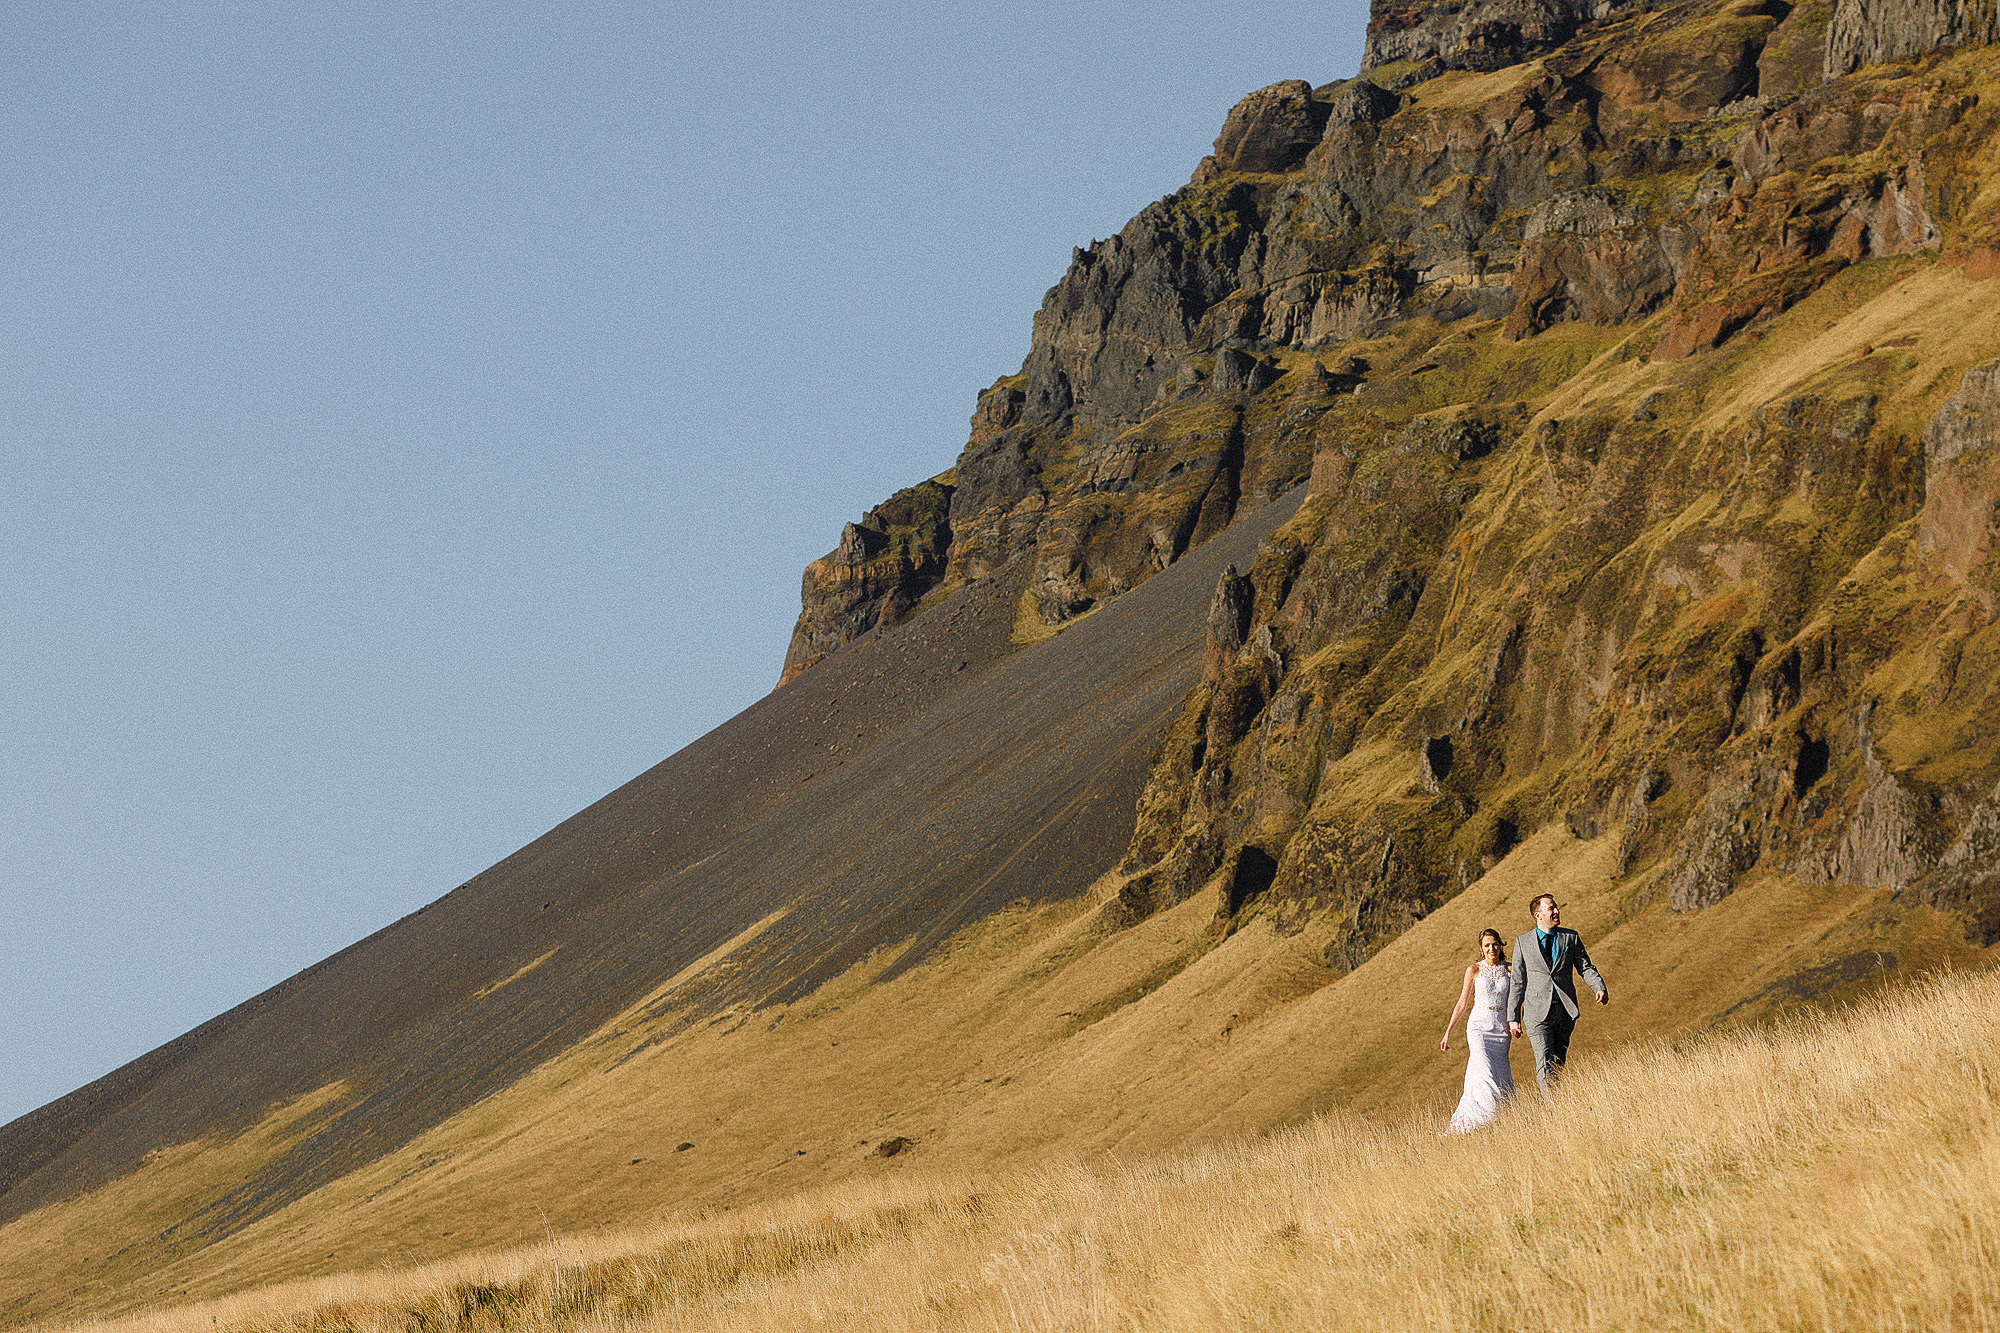 Iceland elopement photos